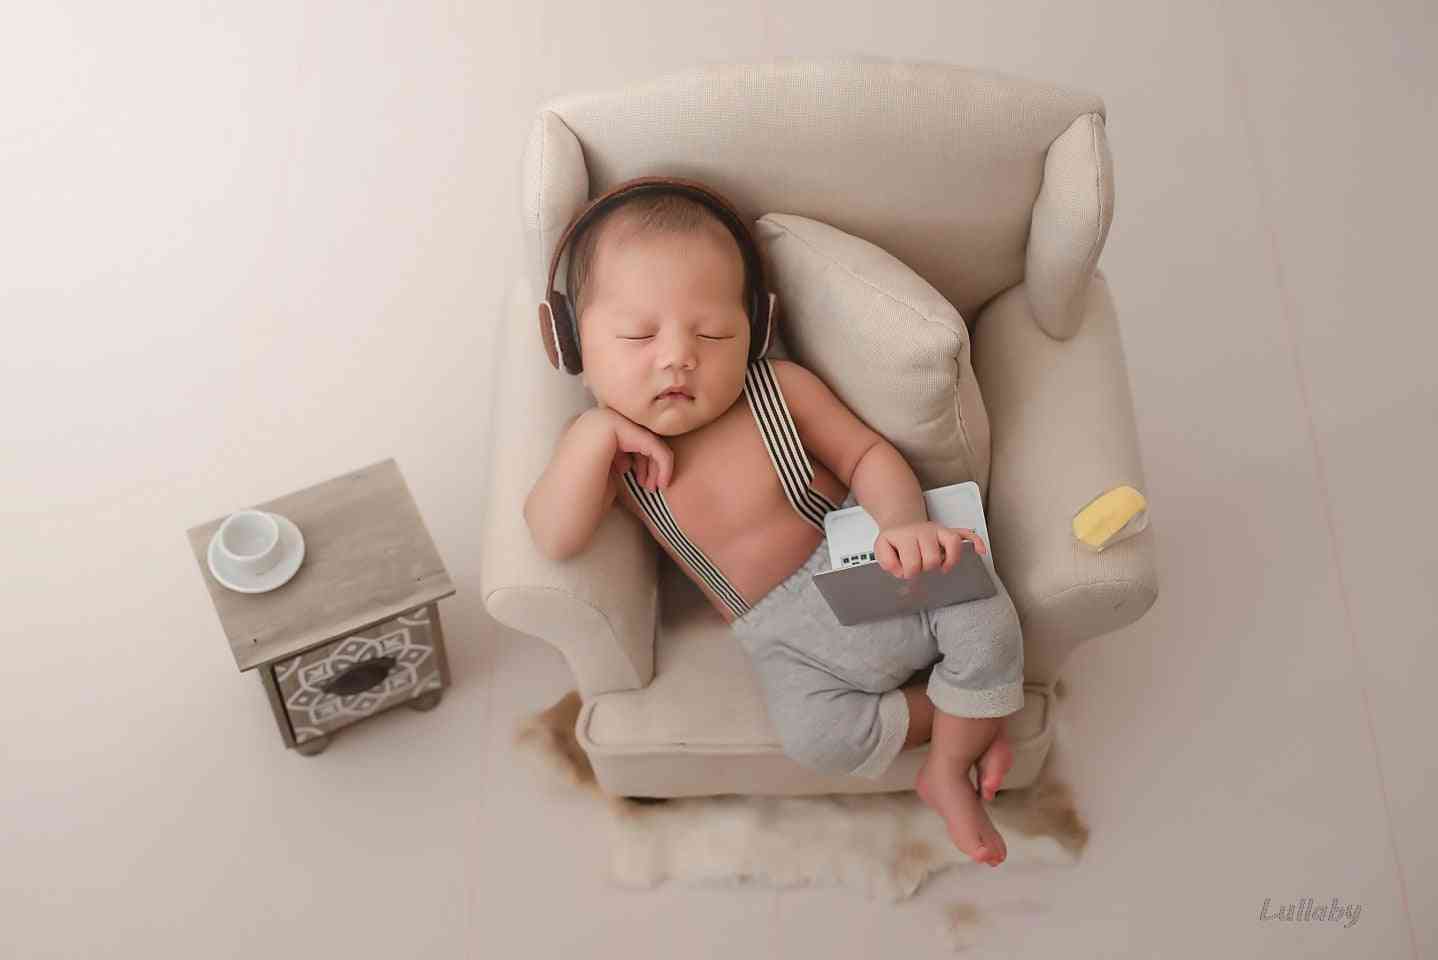 Baby fotografering rekvisitter mini laptop skyde tilbehør, kreativ fotoshoot lille studio roman dekorationer - hvid